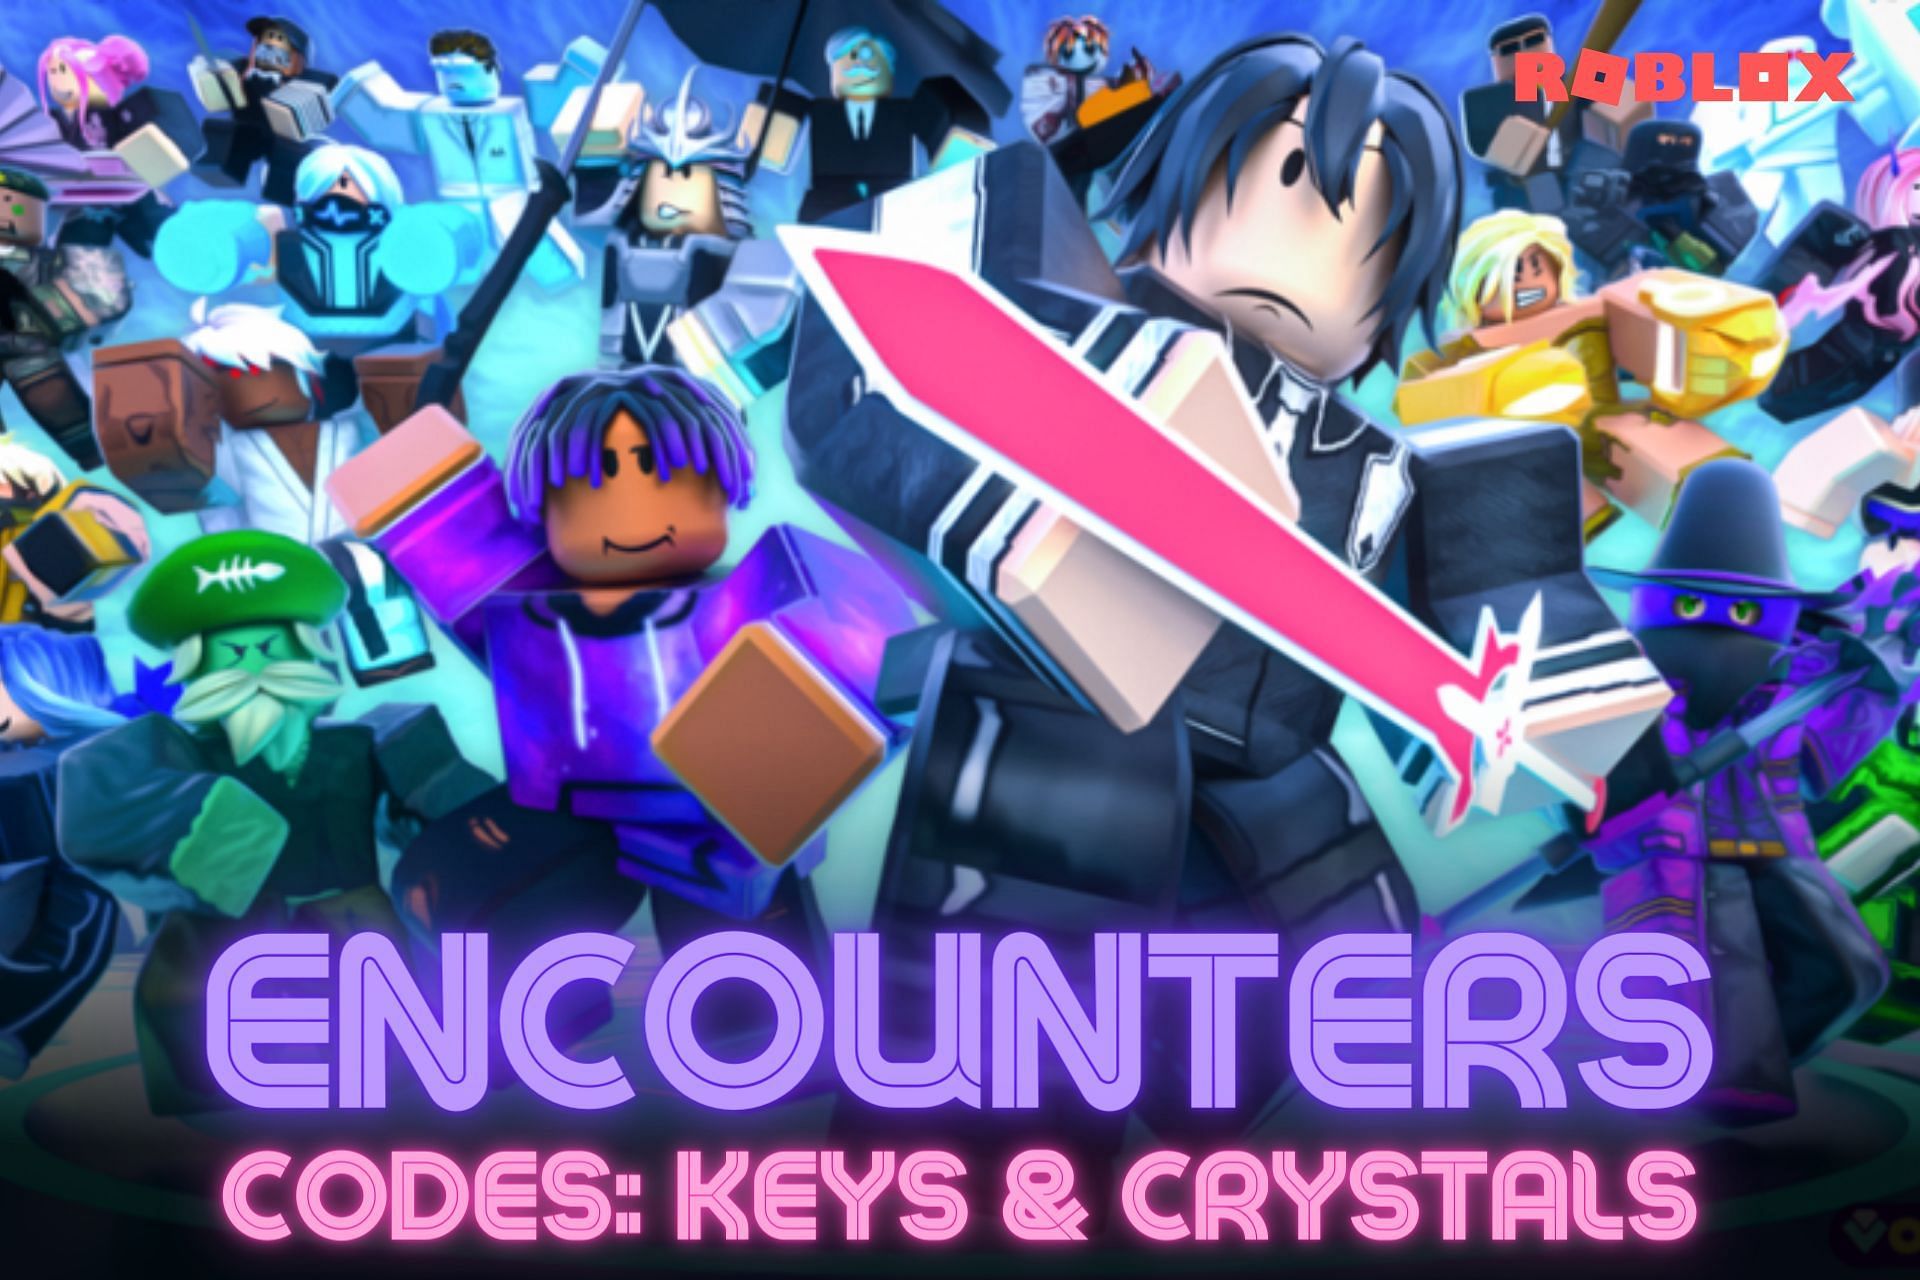 Roblox Encounters Codes for November 2022 Keys and Crystals